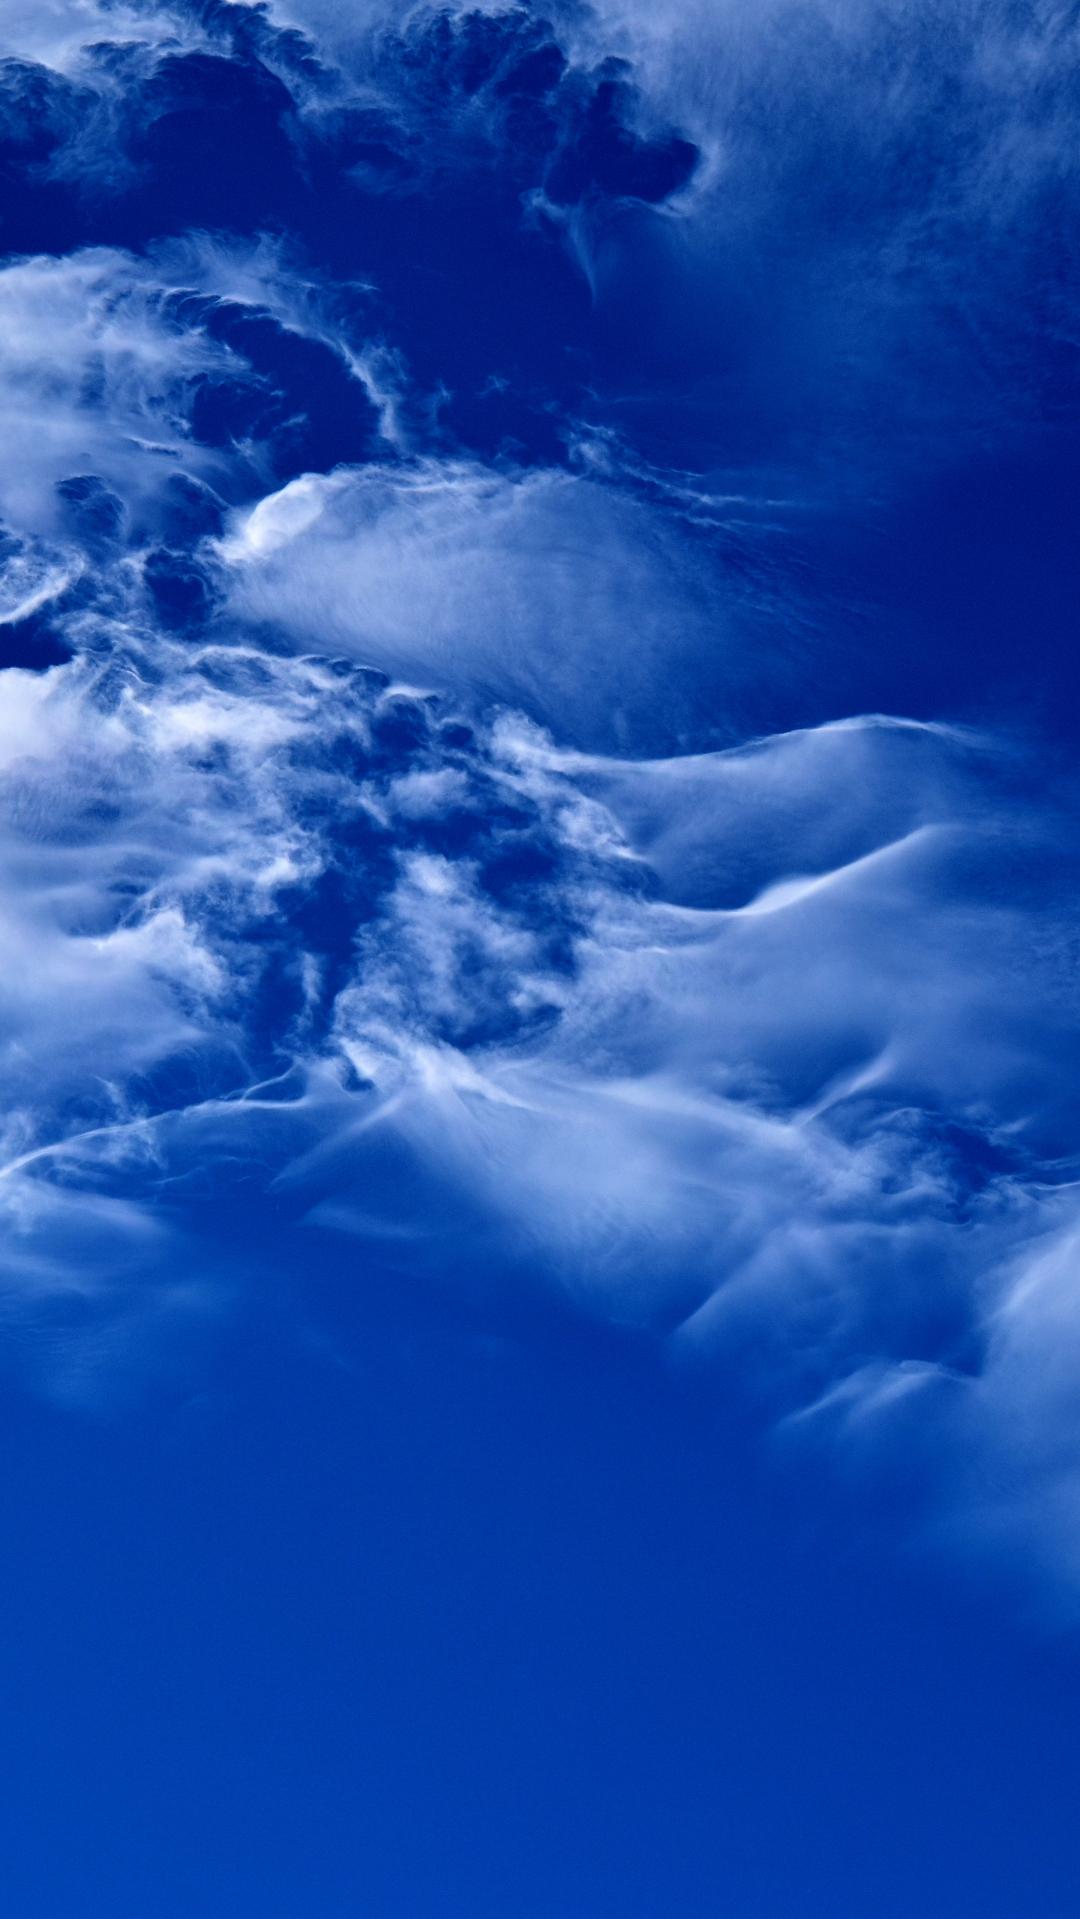 Clouds On A Bright Blue Sky iPhone Wallpaper Idrop News